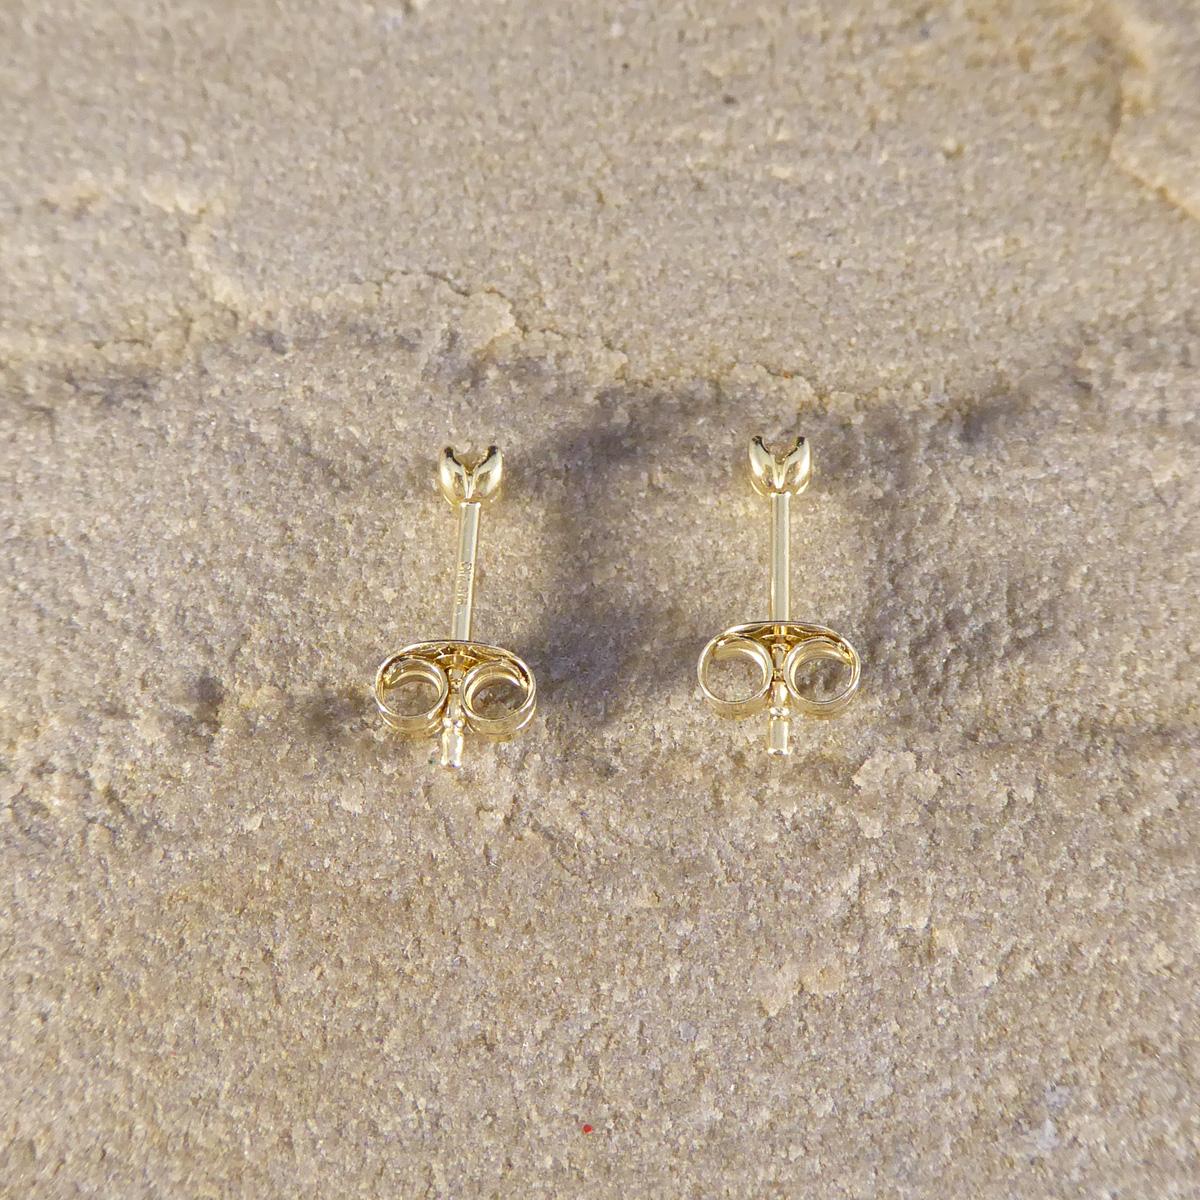 Brilliant Cut 0.10ct Diamond Stud Earrings in Yellow Gold